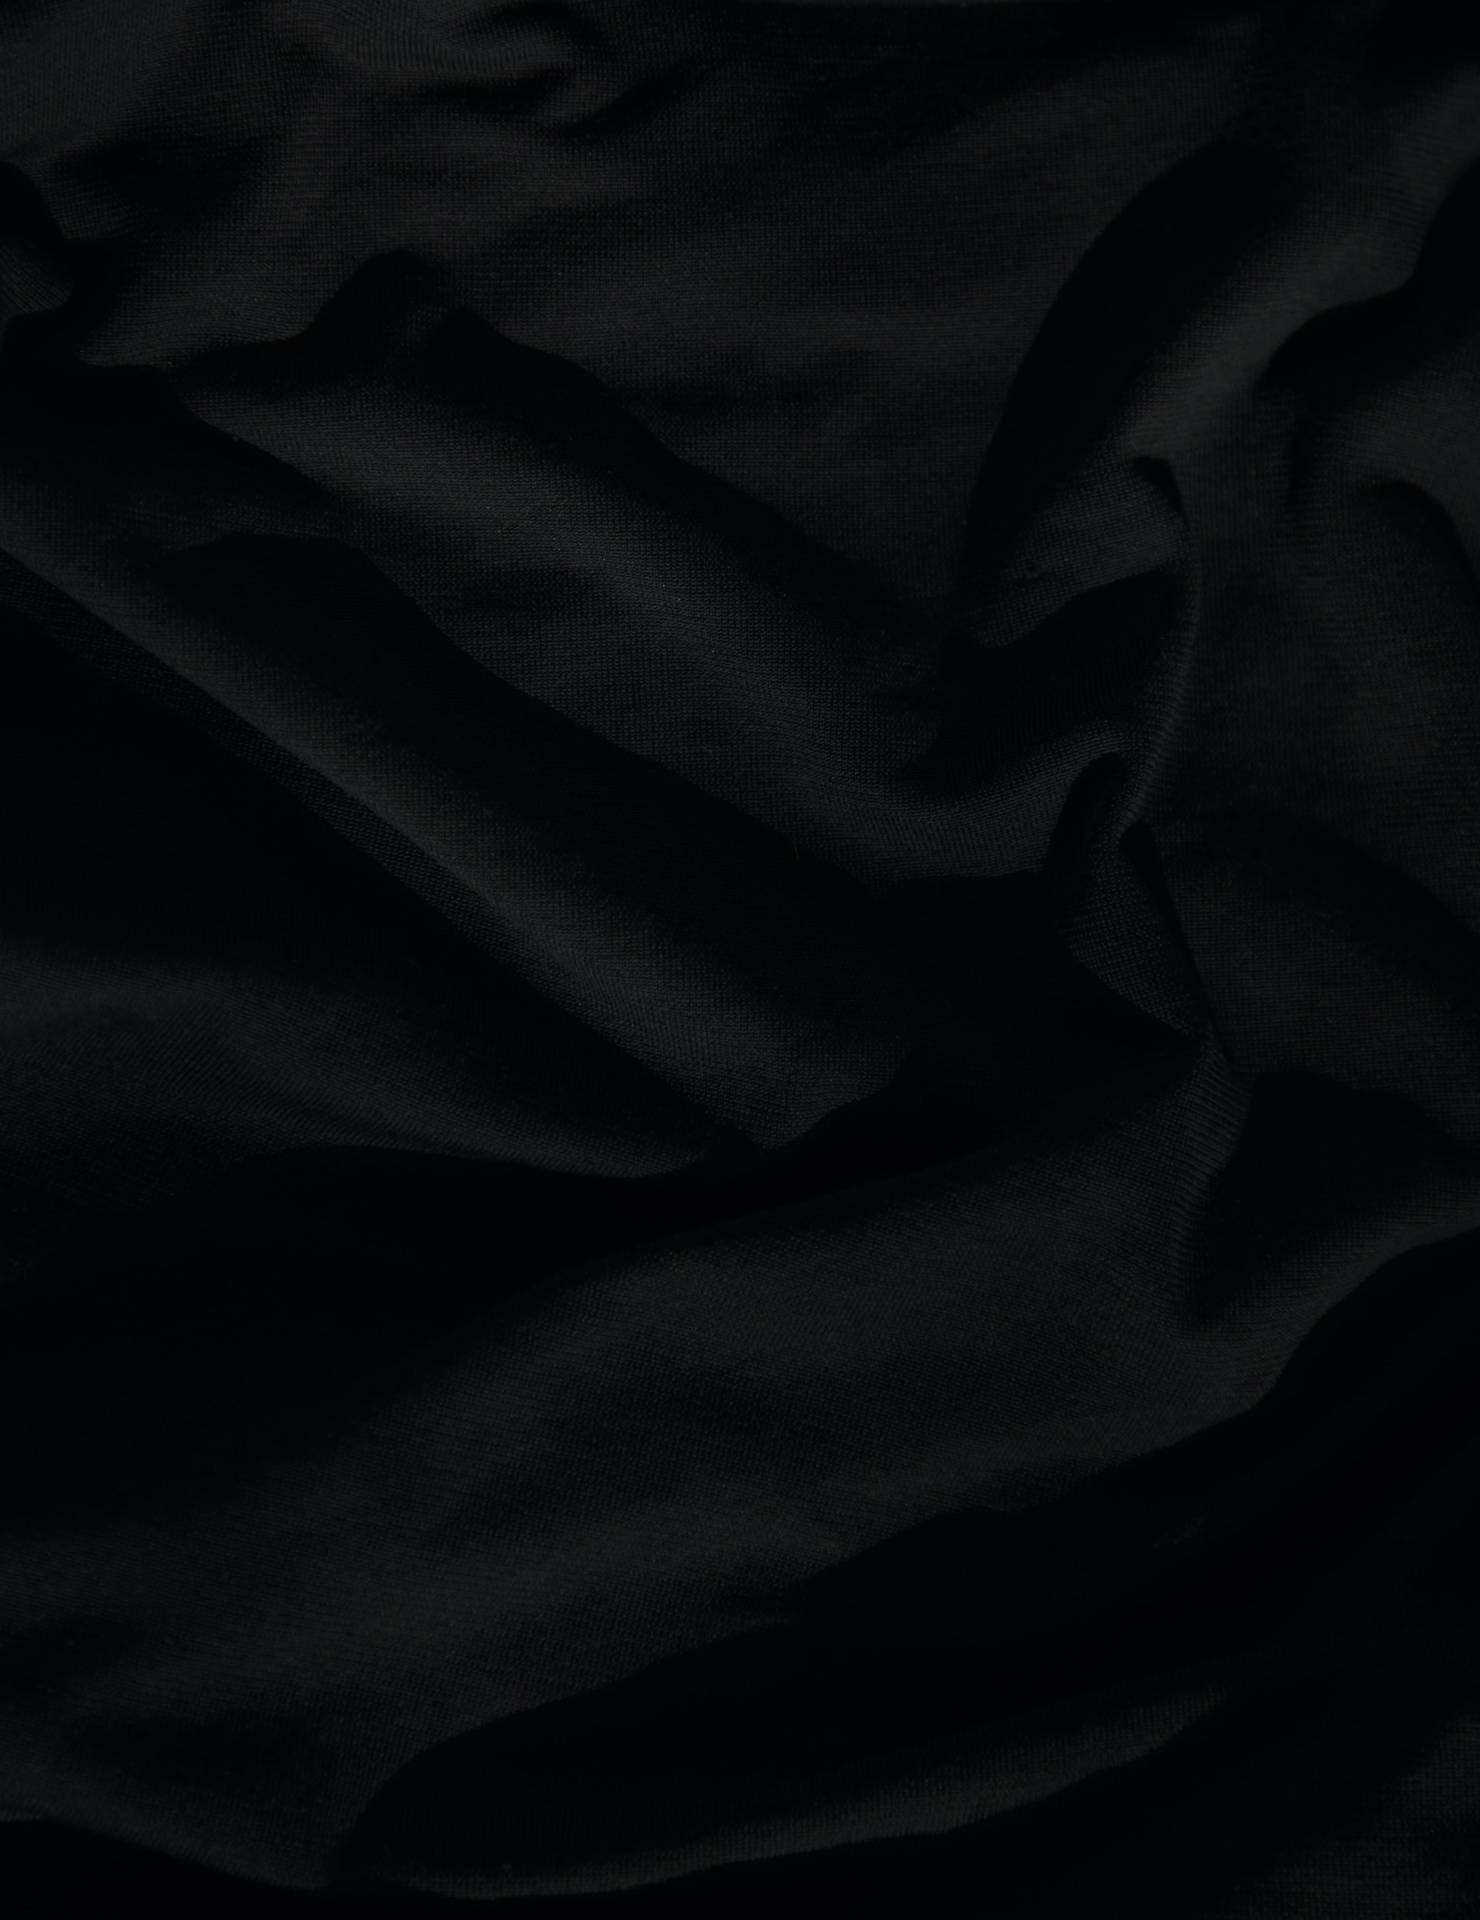 Rayon Cloth Black Aesthetic Tumblr Iphone